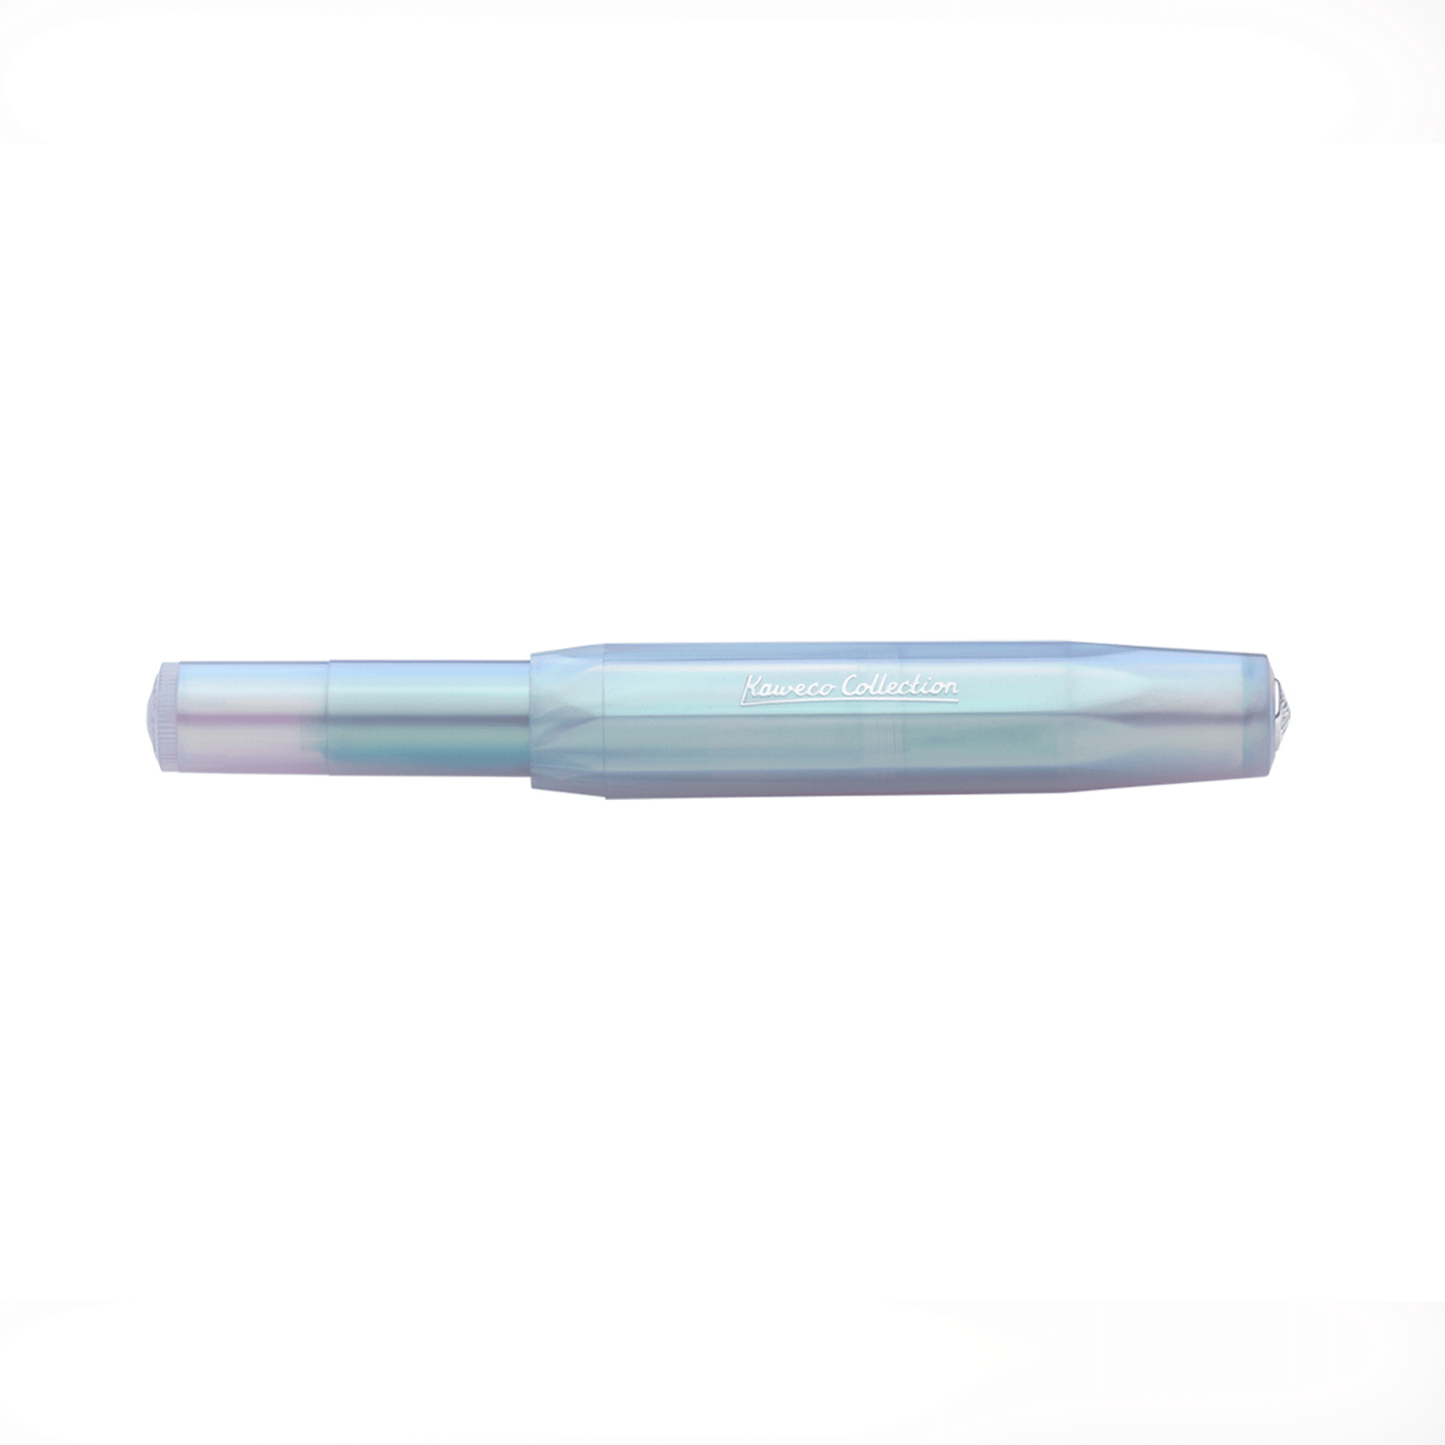 Collection Fountain Pen - Iridescent Pearl